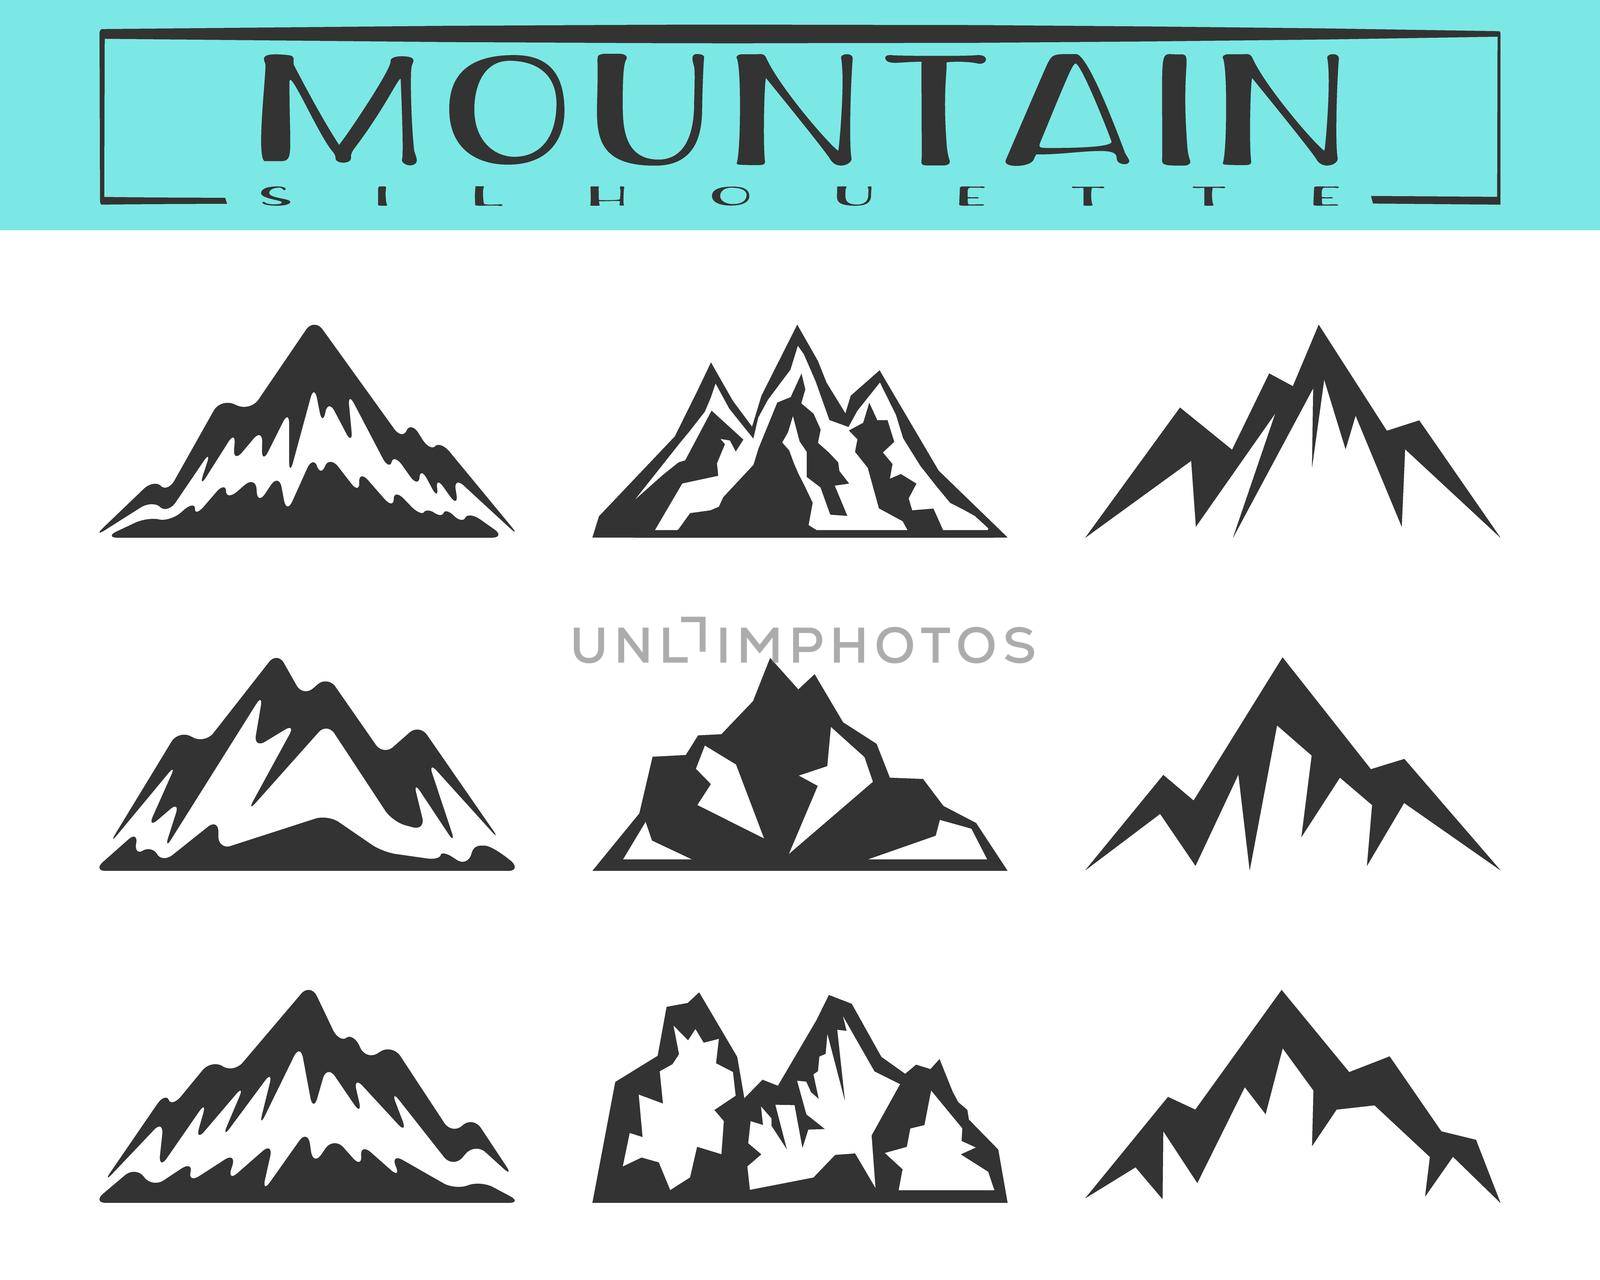 Mountain silhouette set by Bobnevv